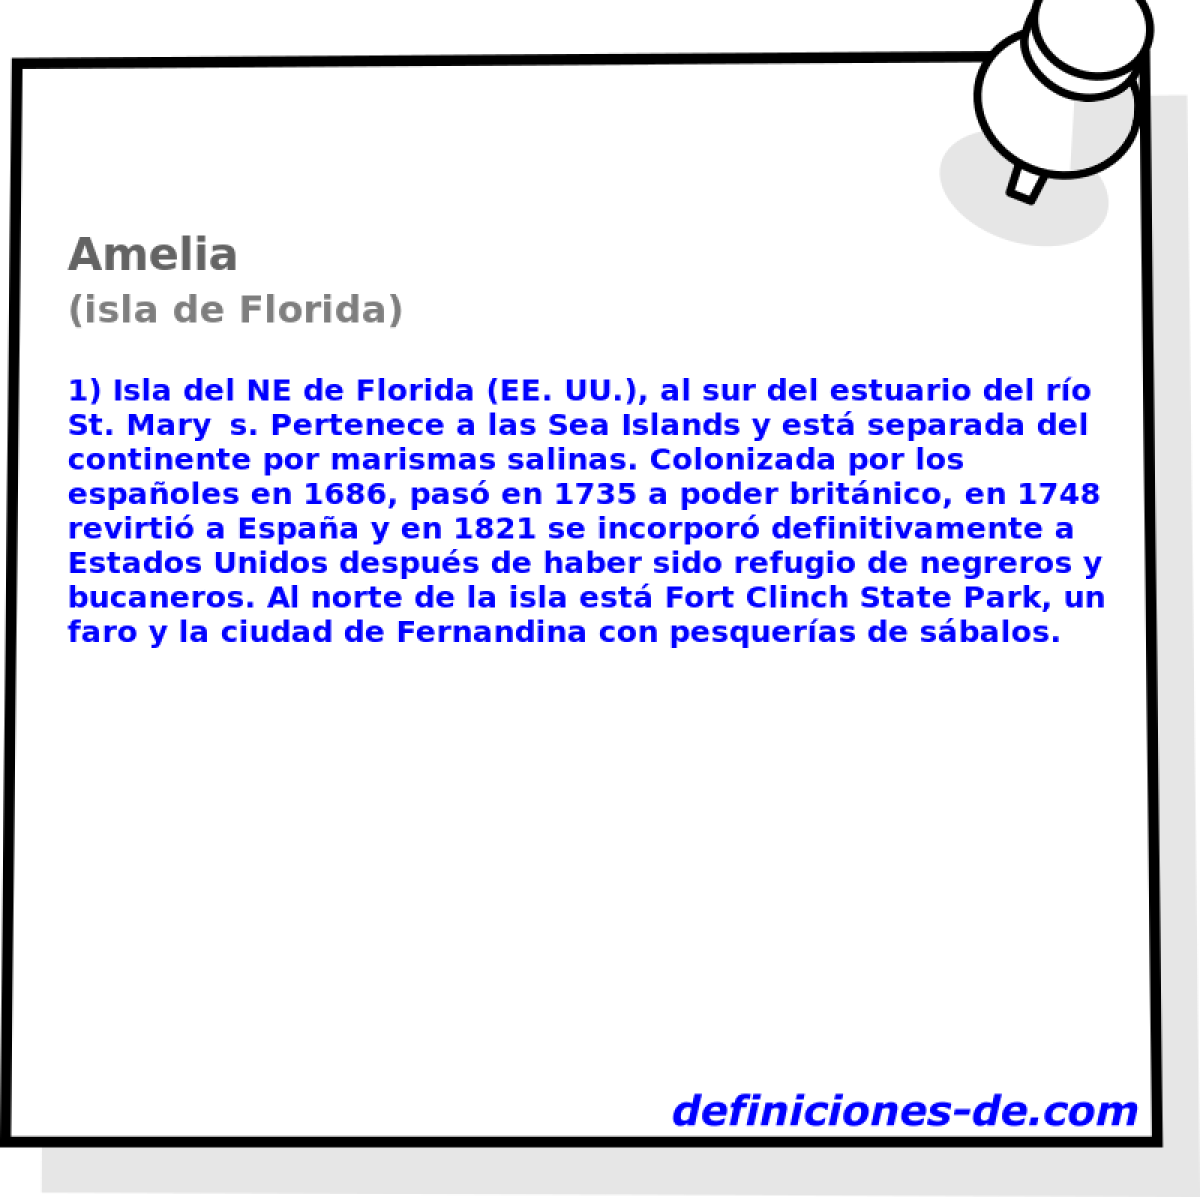 Amelia (isla de Florida)